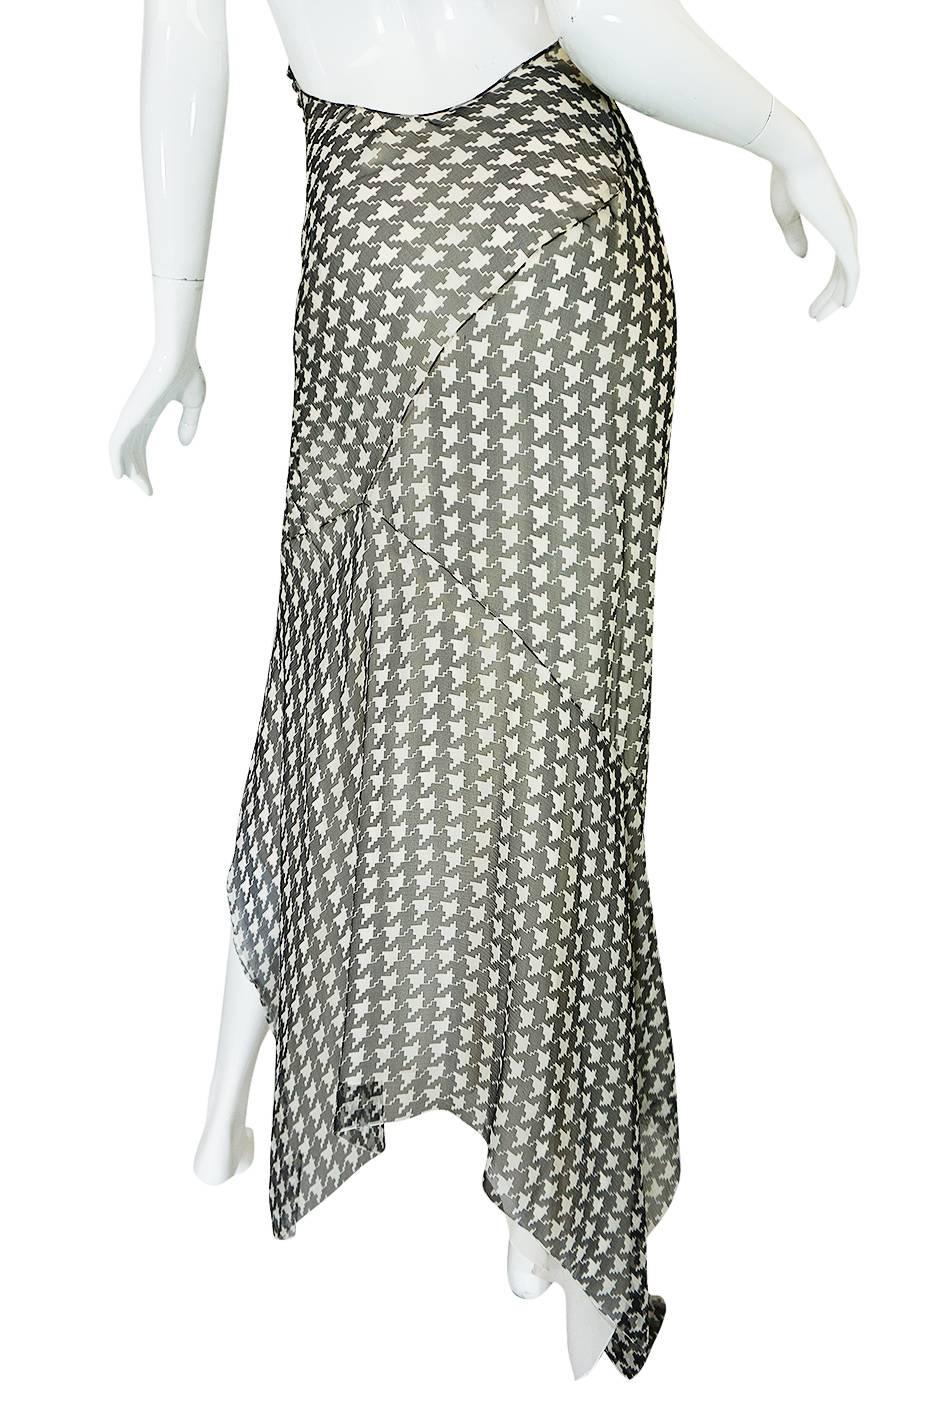 Early 2000s Galliano for Dior Check Silk Chiffon Bias Cut Dress 3